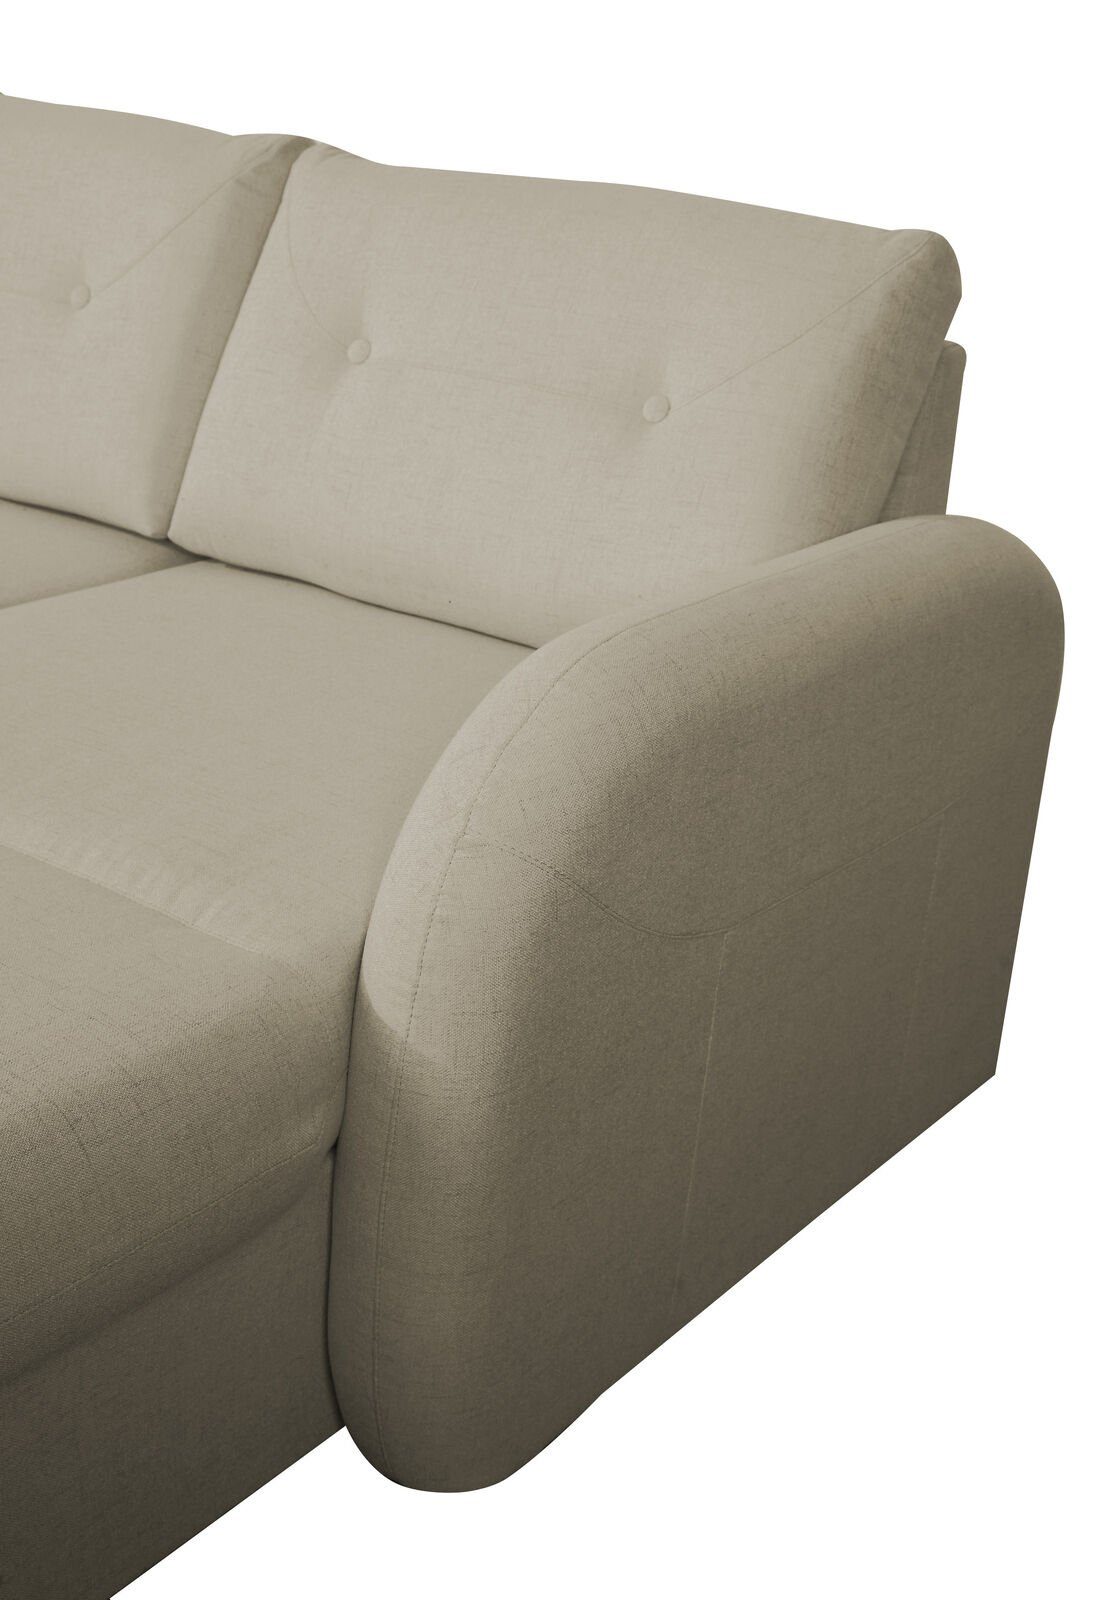 JVmoebel Ecksofa Wohnlandschaft Ecksofa Stoff U-Form Bettfunktion Couch Design, Made in Europe Beige